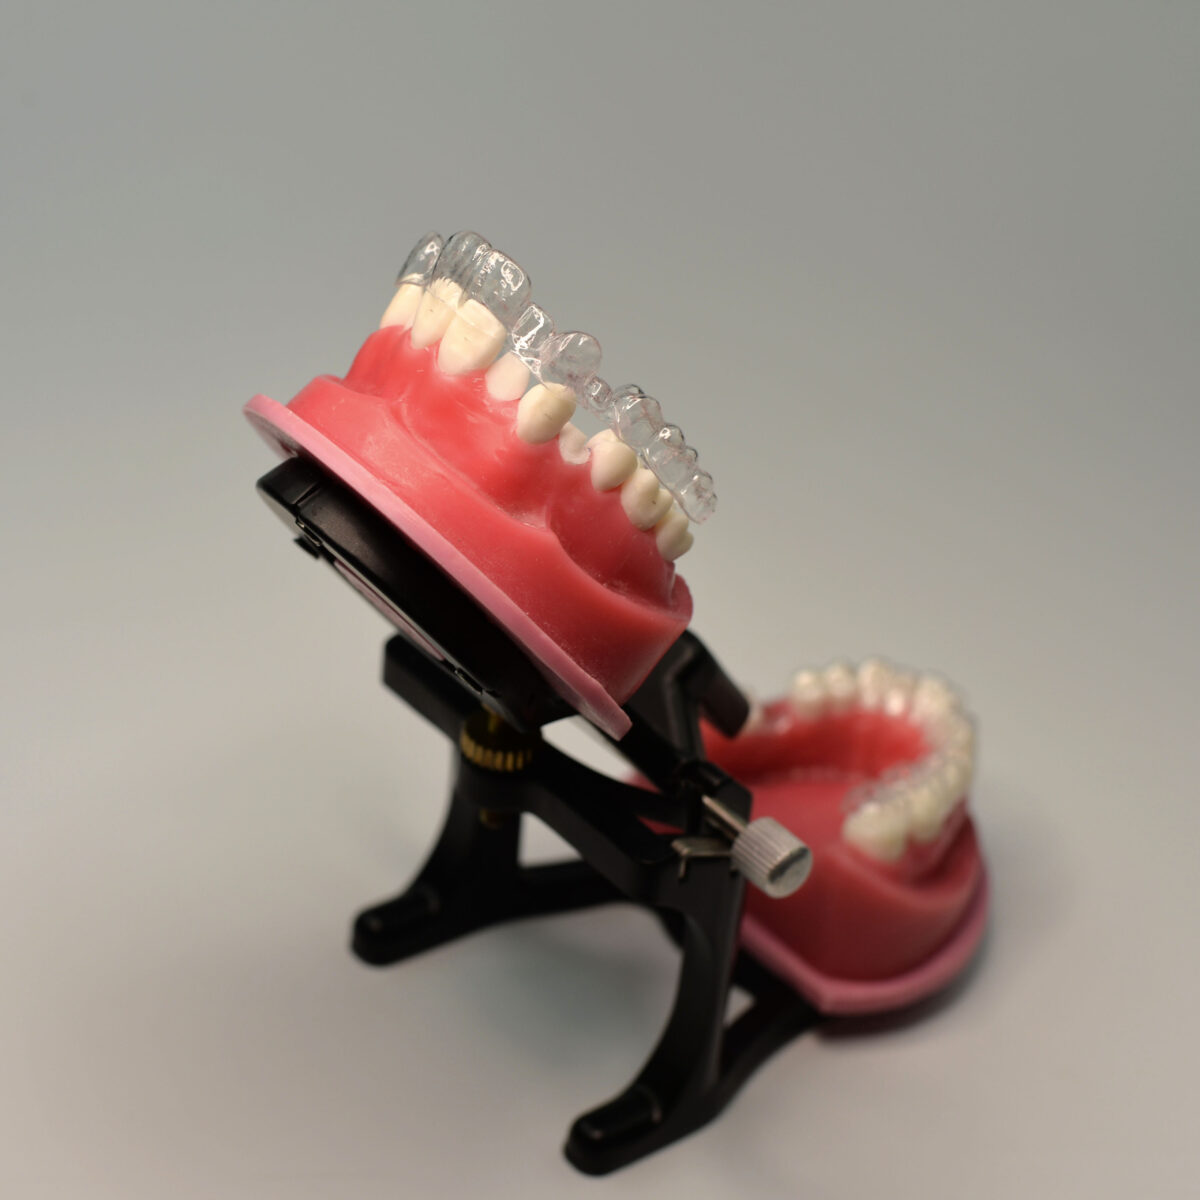 orthodontic training model with retainer